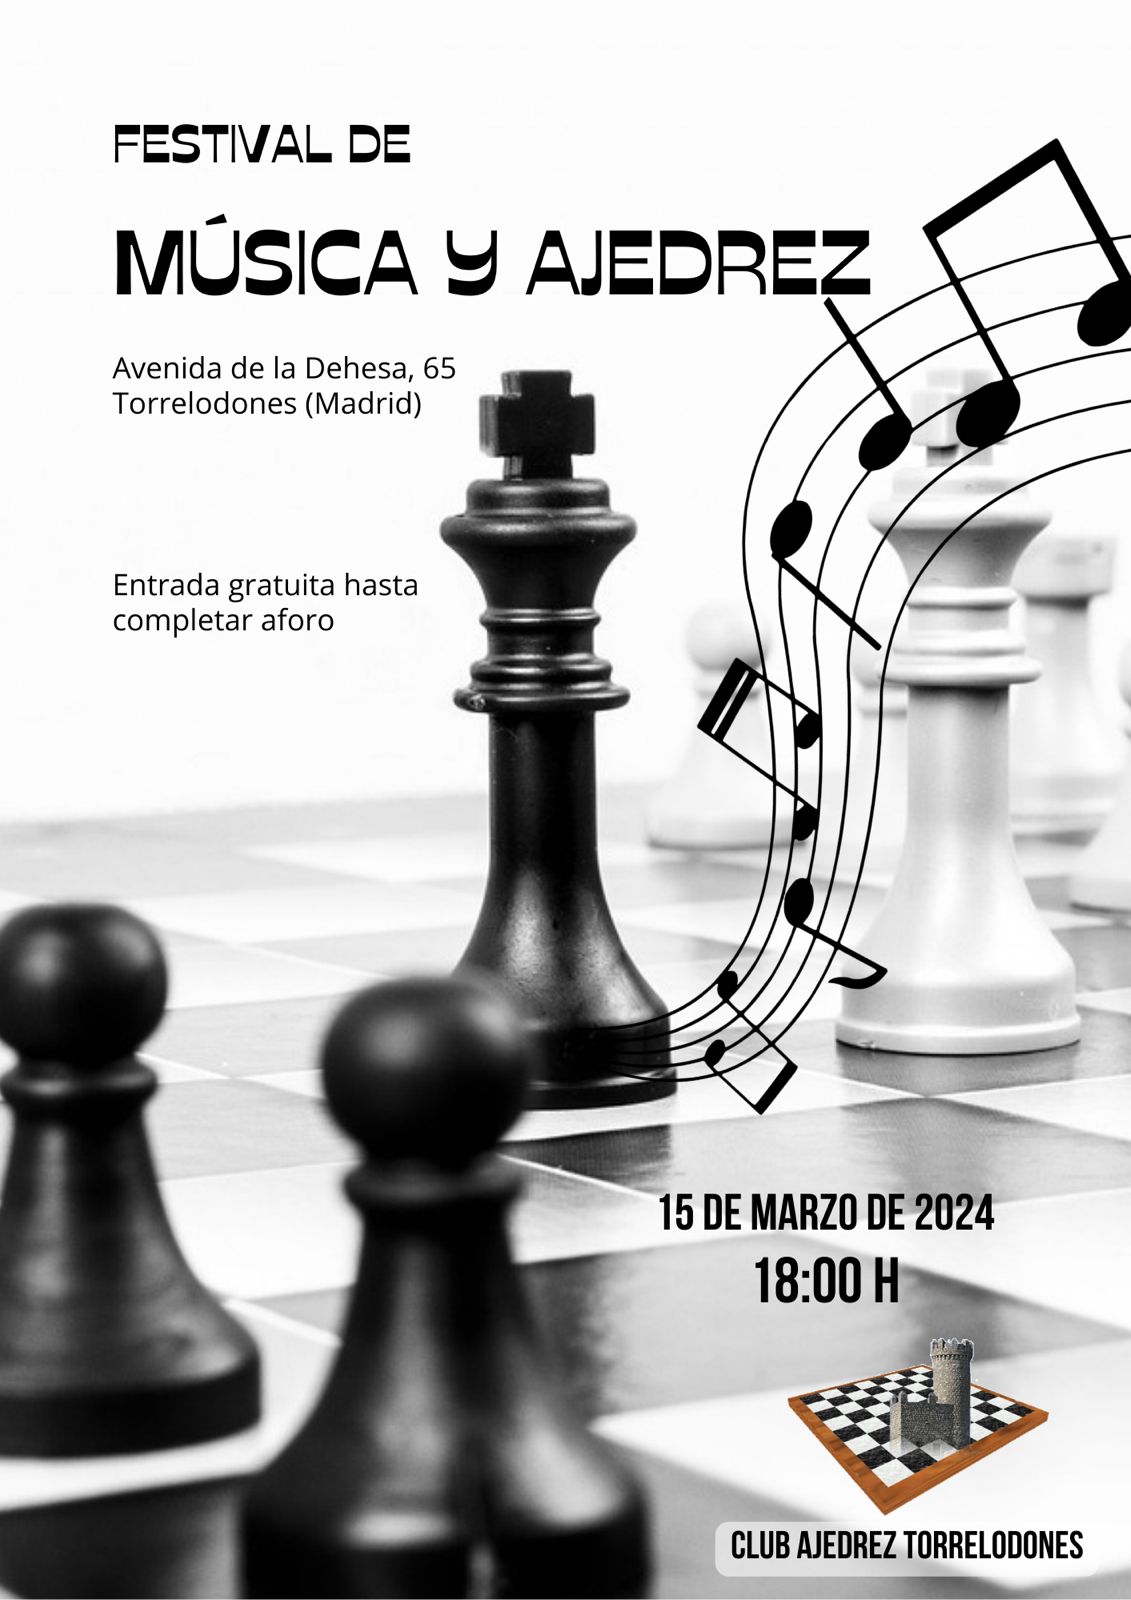 Festival de música y ajedrez